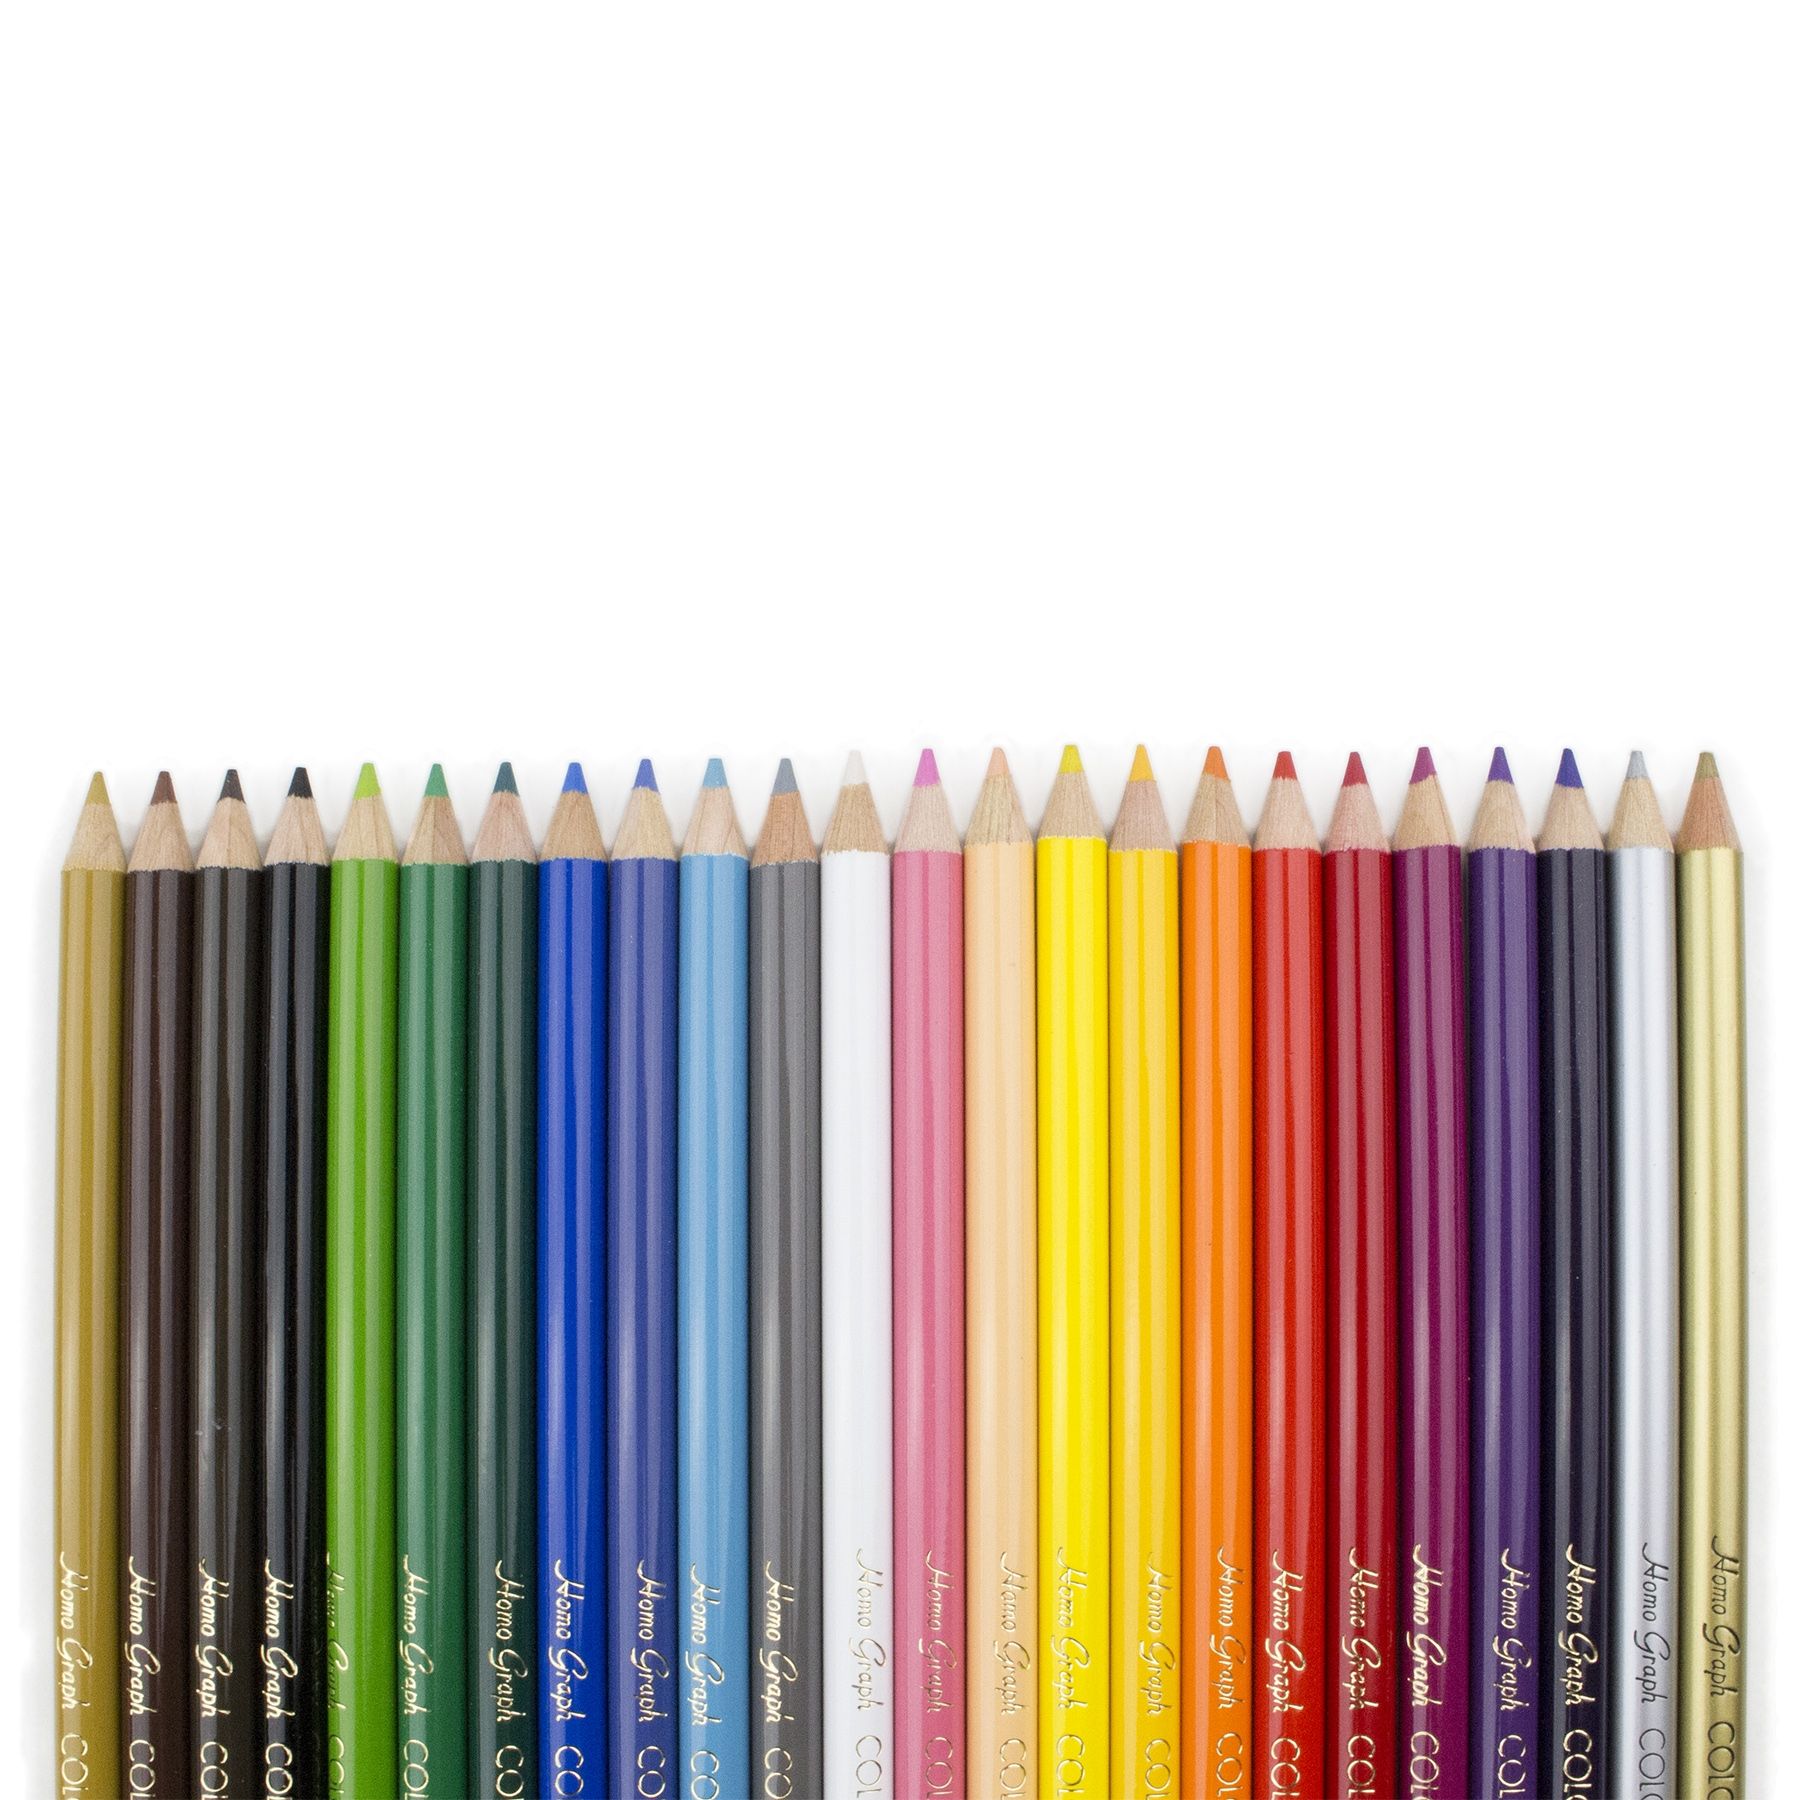 Cra-Z-Art Colored Pencils - 36 count